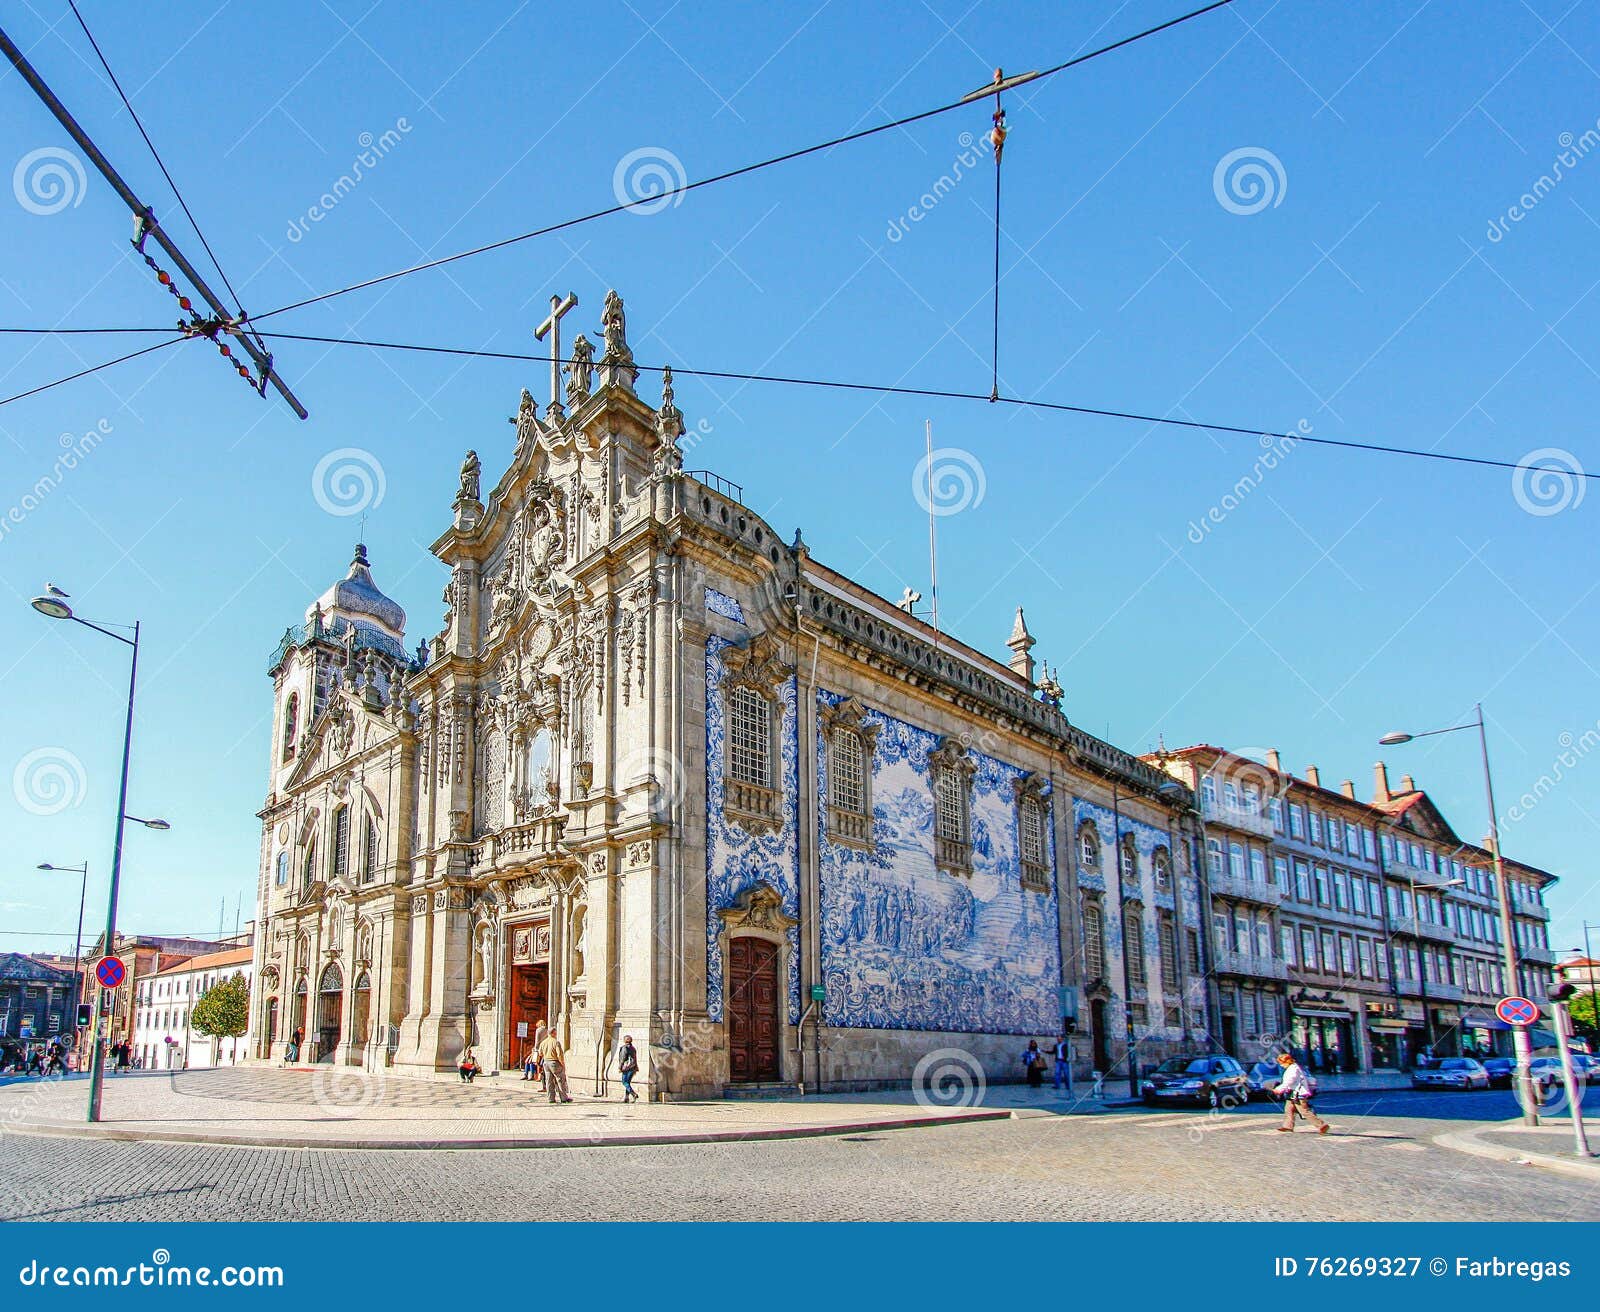 carmelitas church and carmo church, porto, portugal